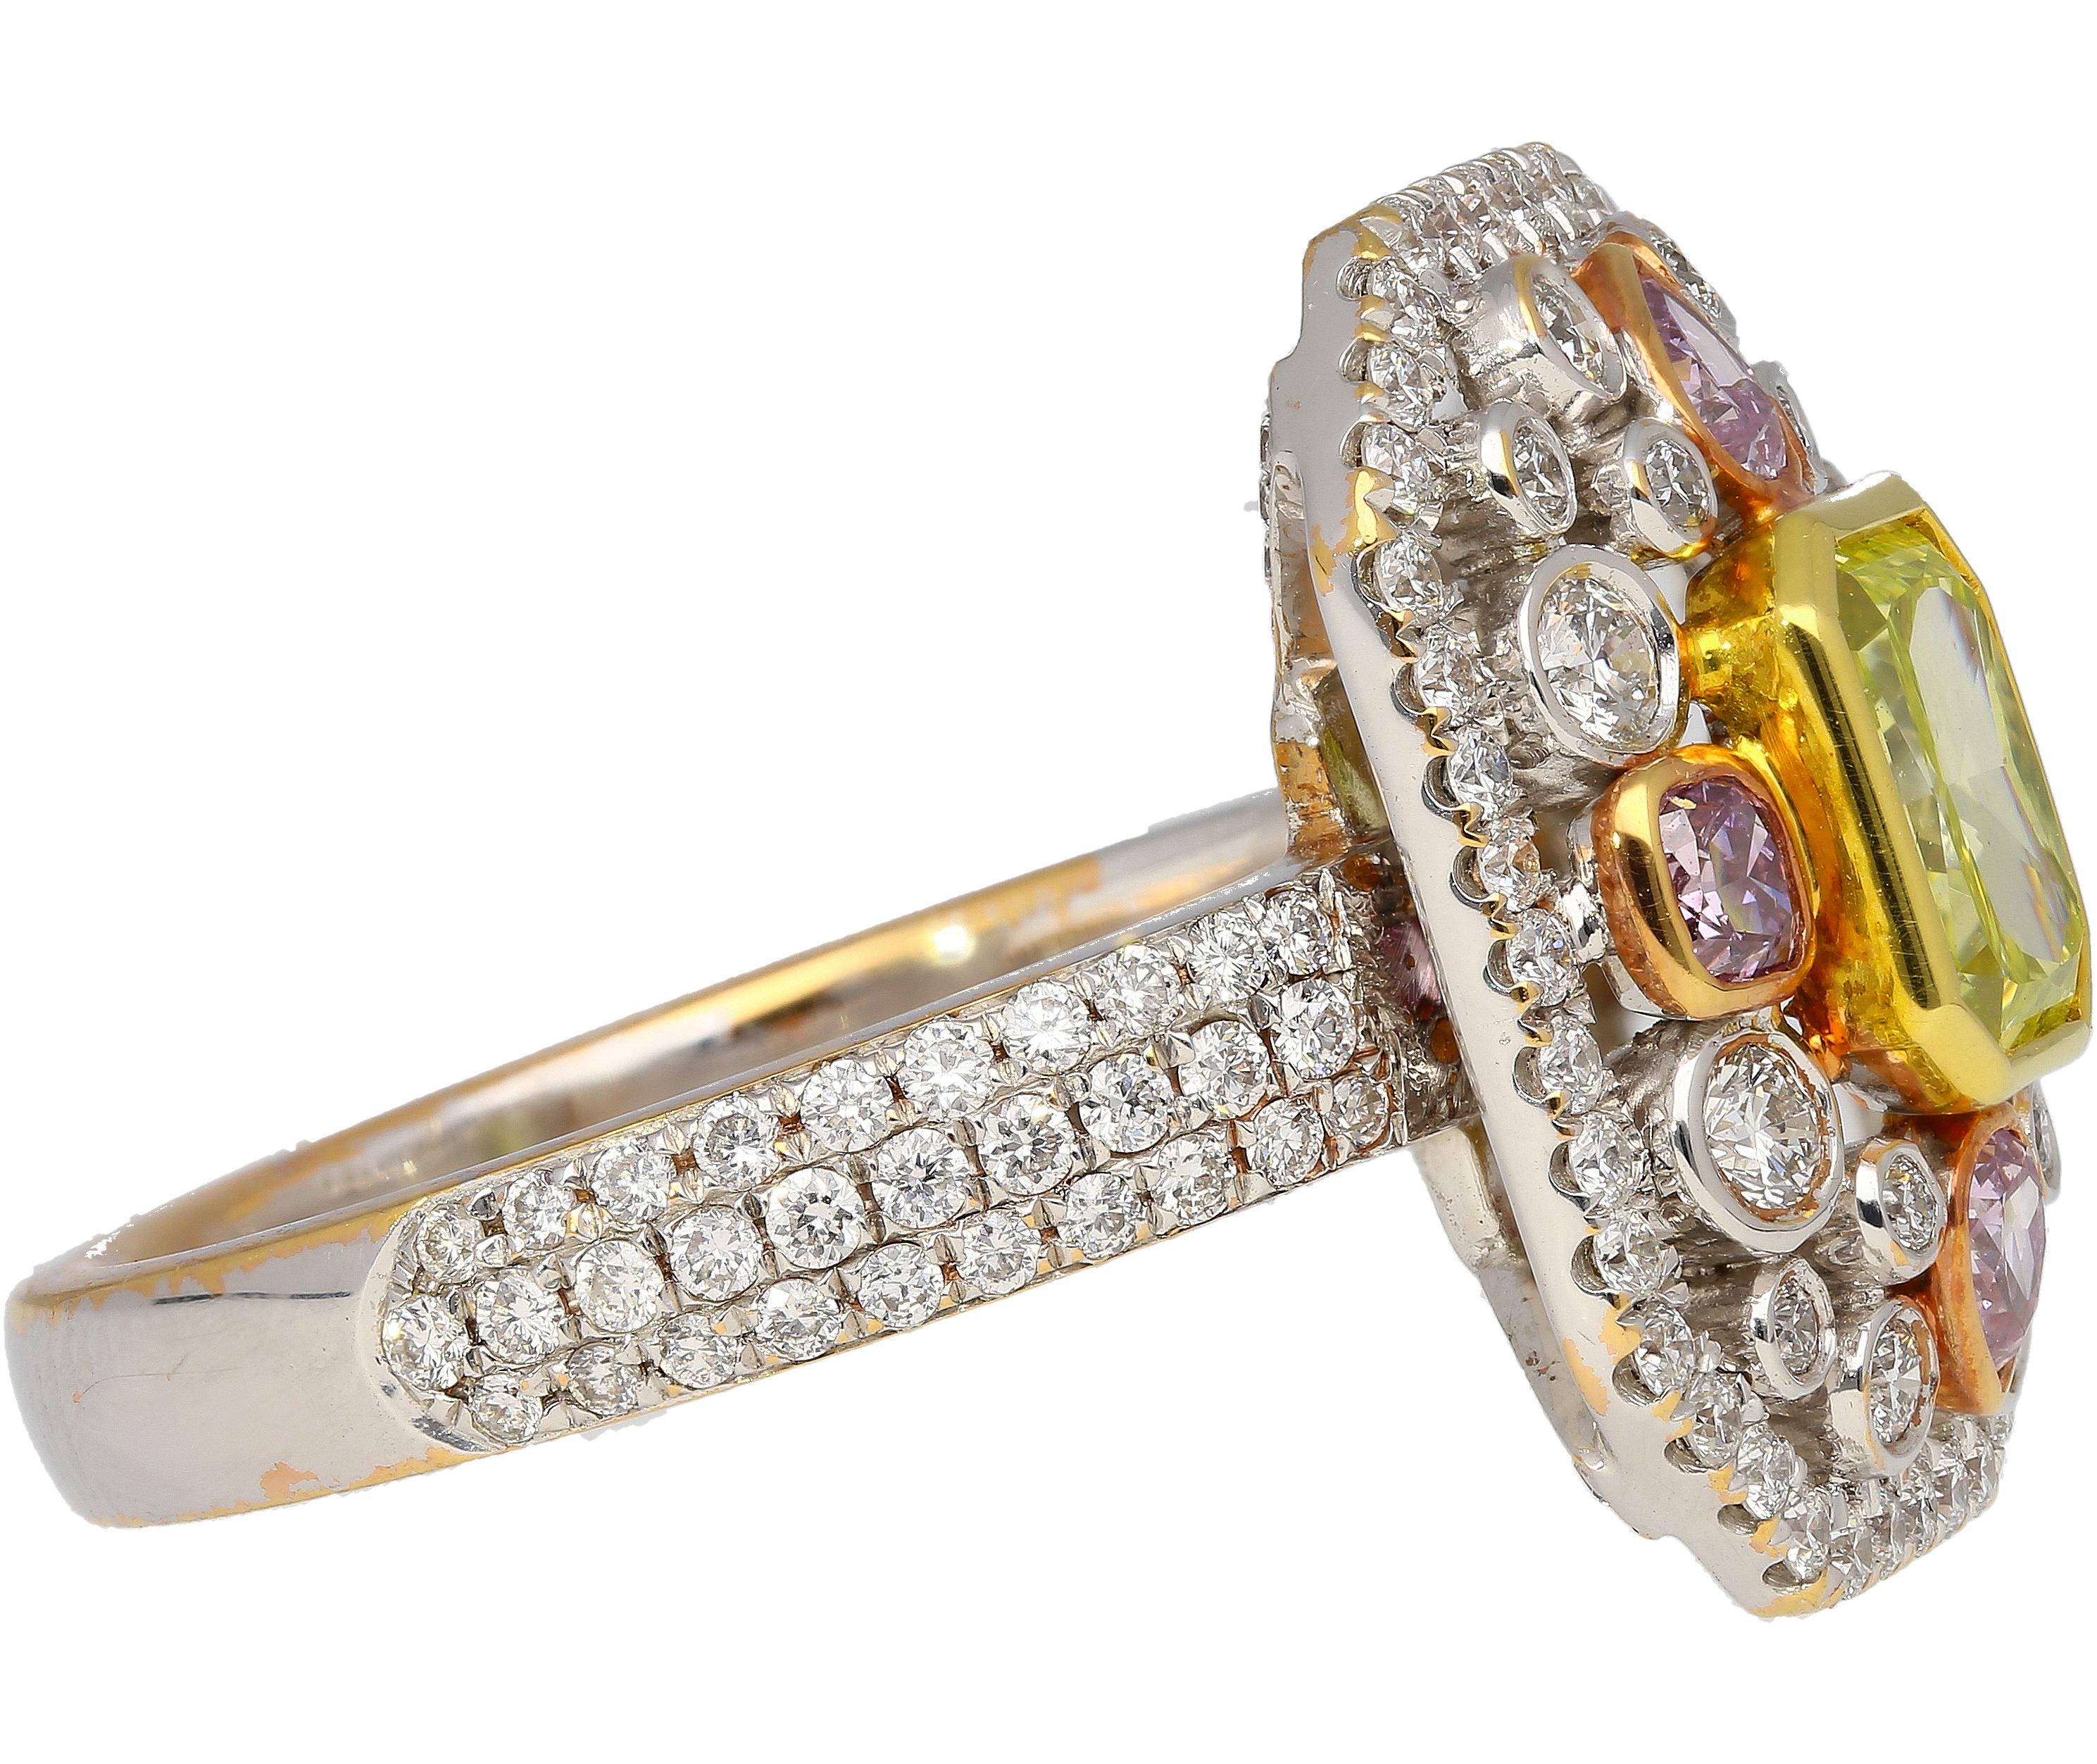 Art Deco GIA Certified 1.15 Carat Radiant Cut Fancy Intense Yellowish Green Diamond Ring For Sale